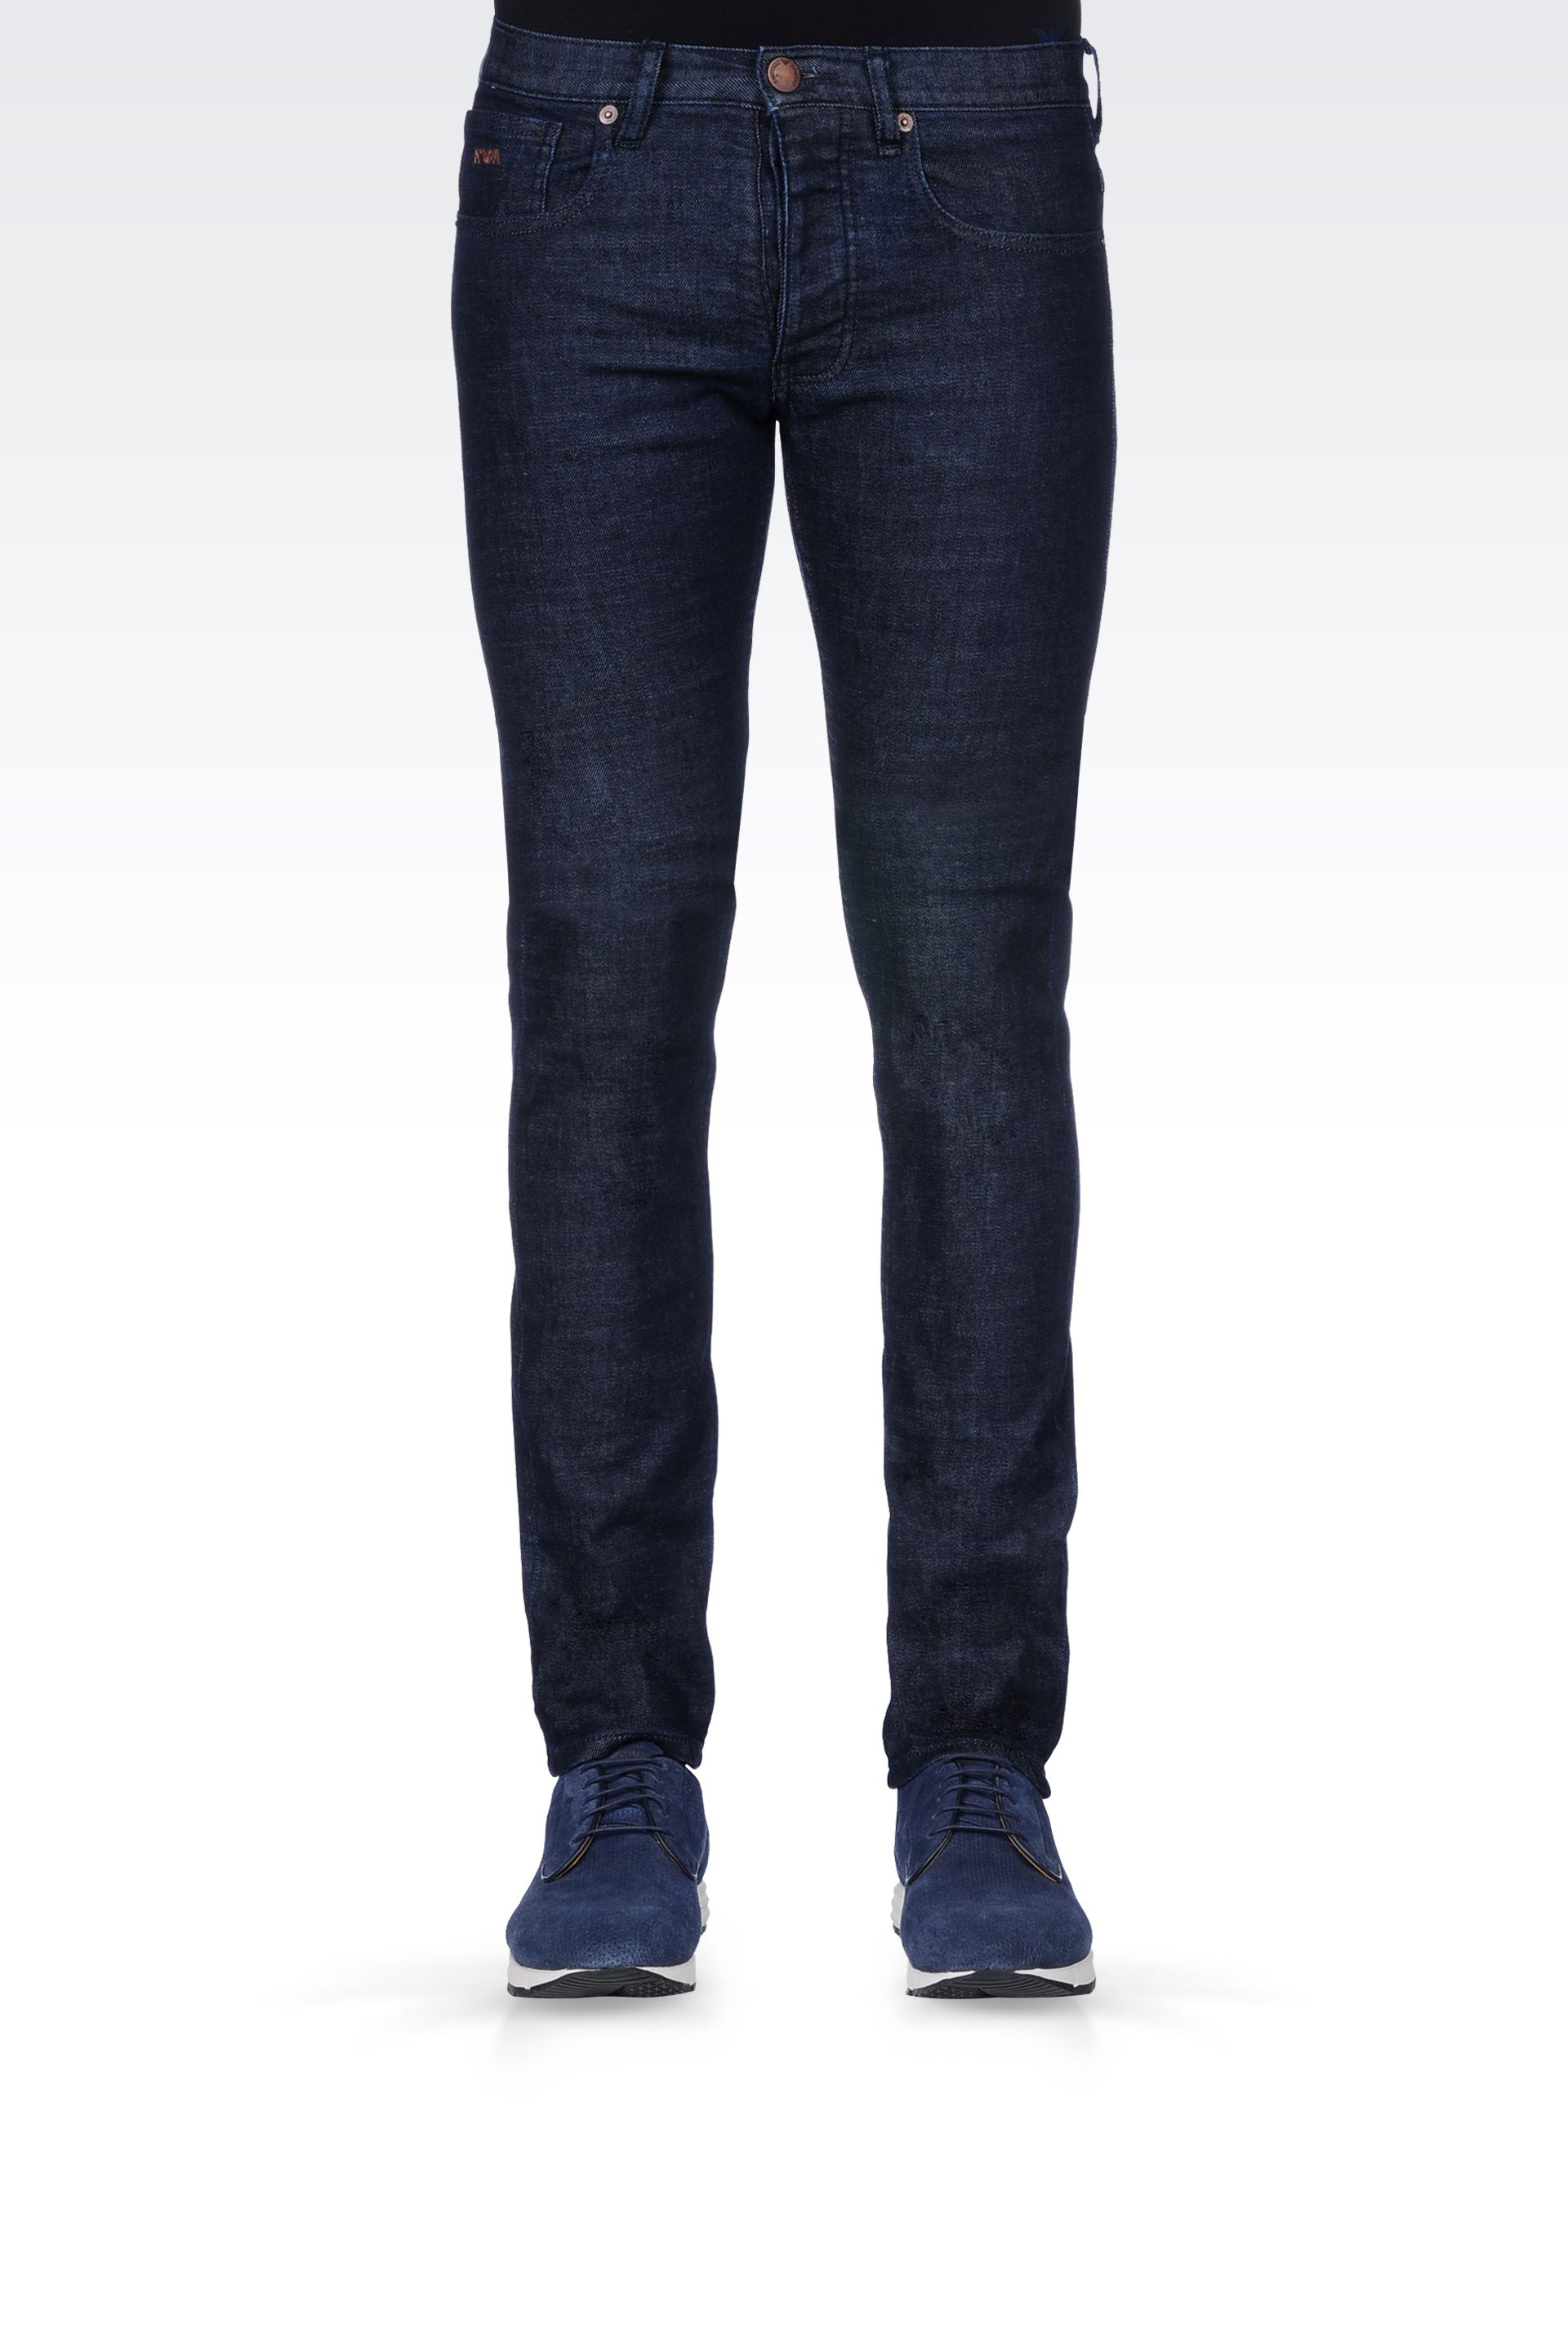 Emporio Armani Slim Fit Dark Wash Jeans in Blue for Men - Lyst